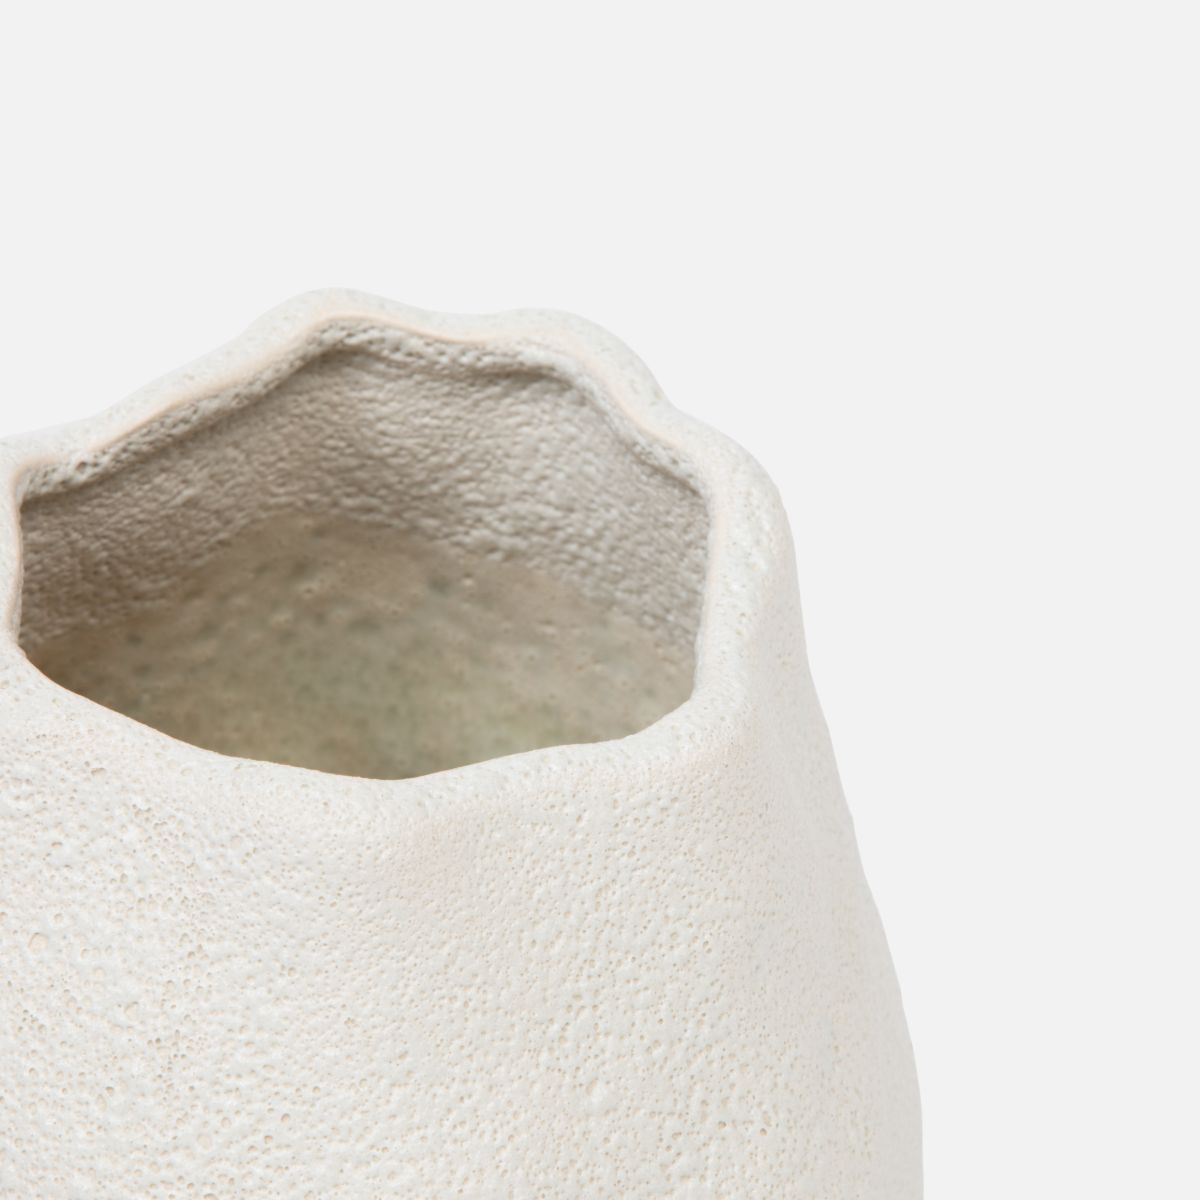 Porous White Ceramic Vase